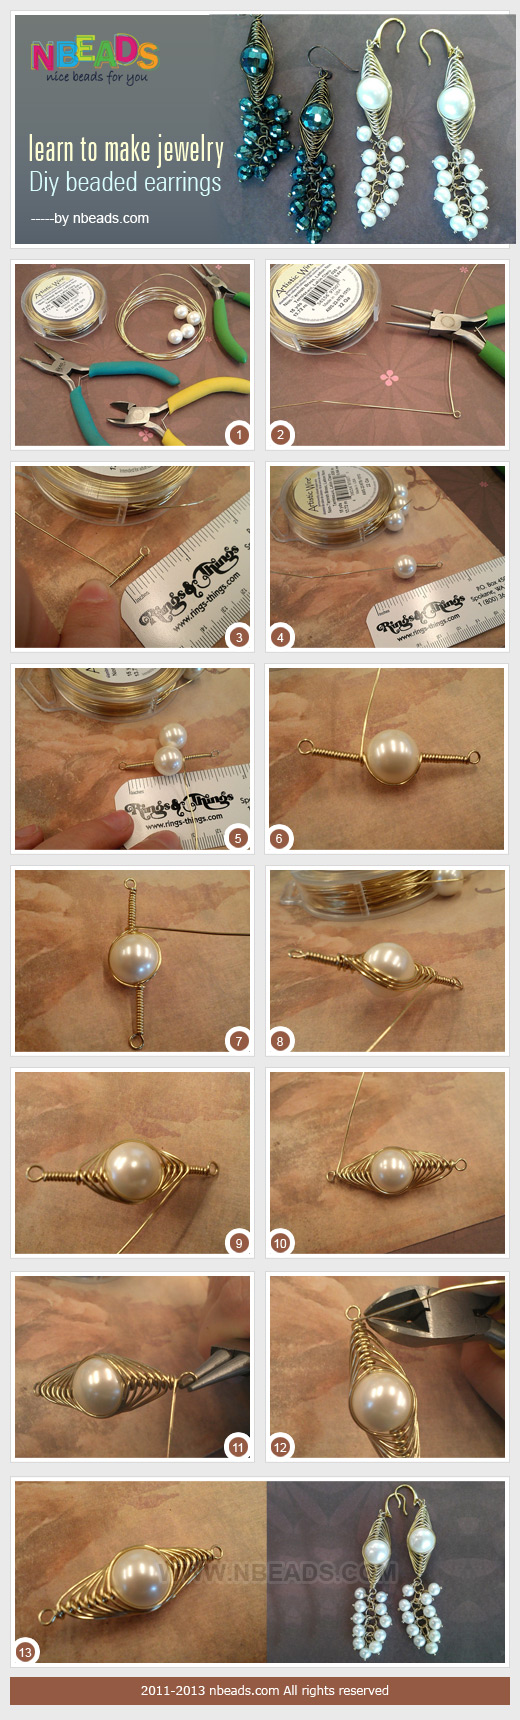 learn to make jewelry - diy beaded earrings